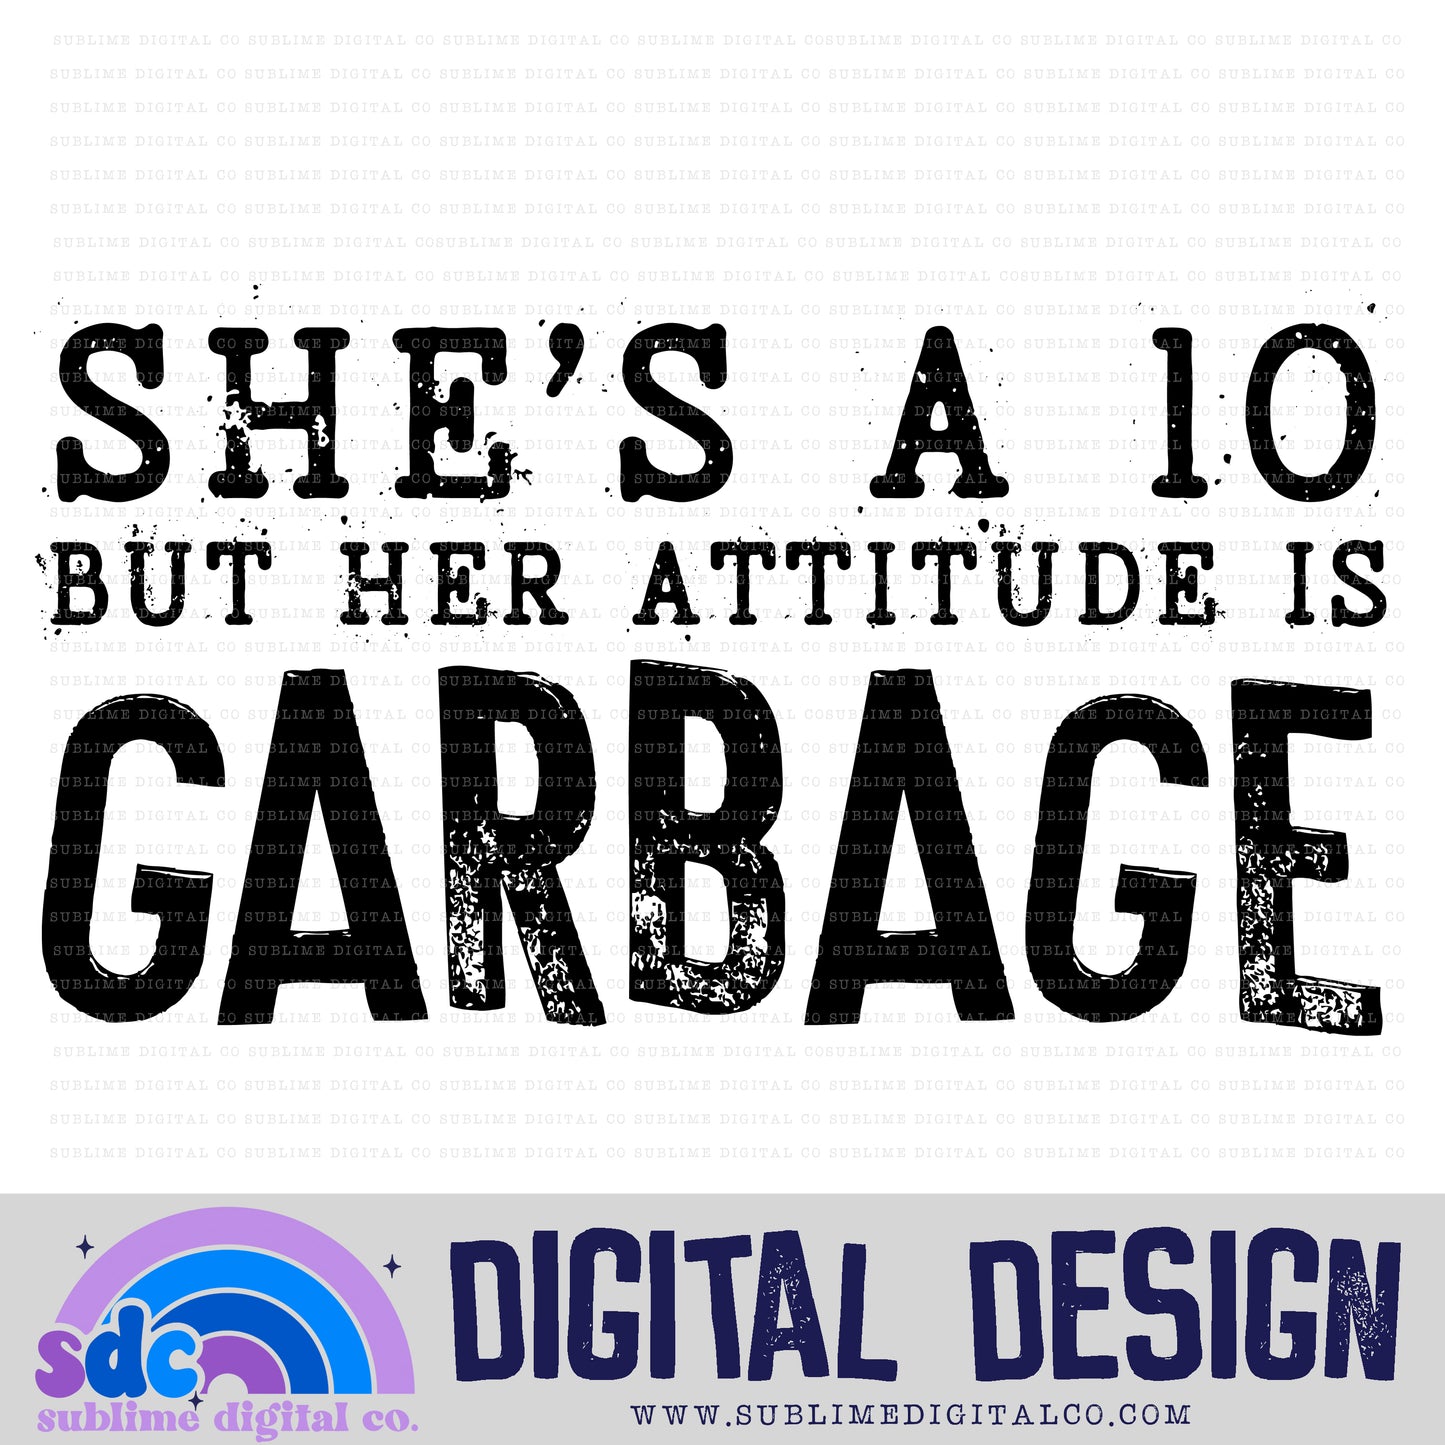 "She's a 10, but...." Digital Design Drive